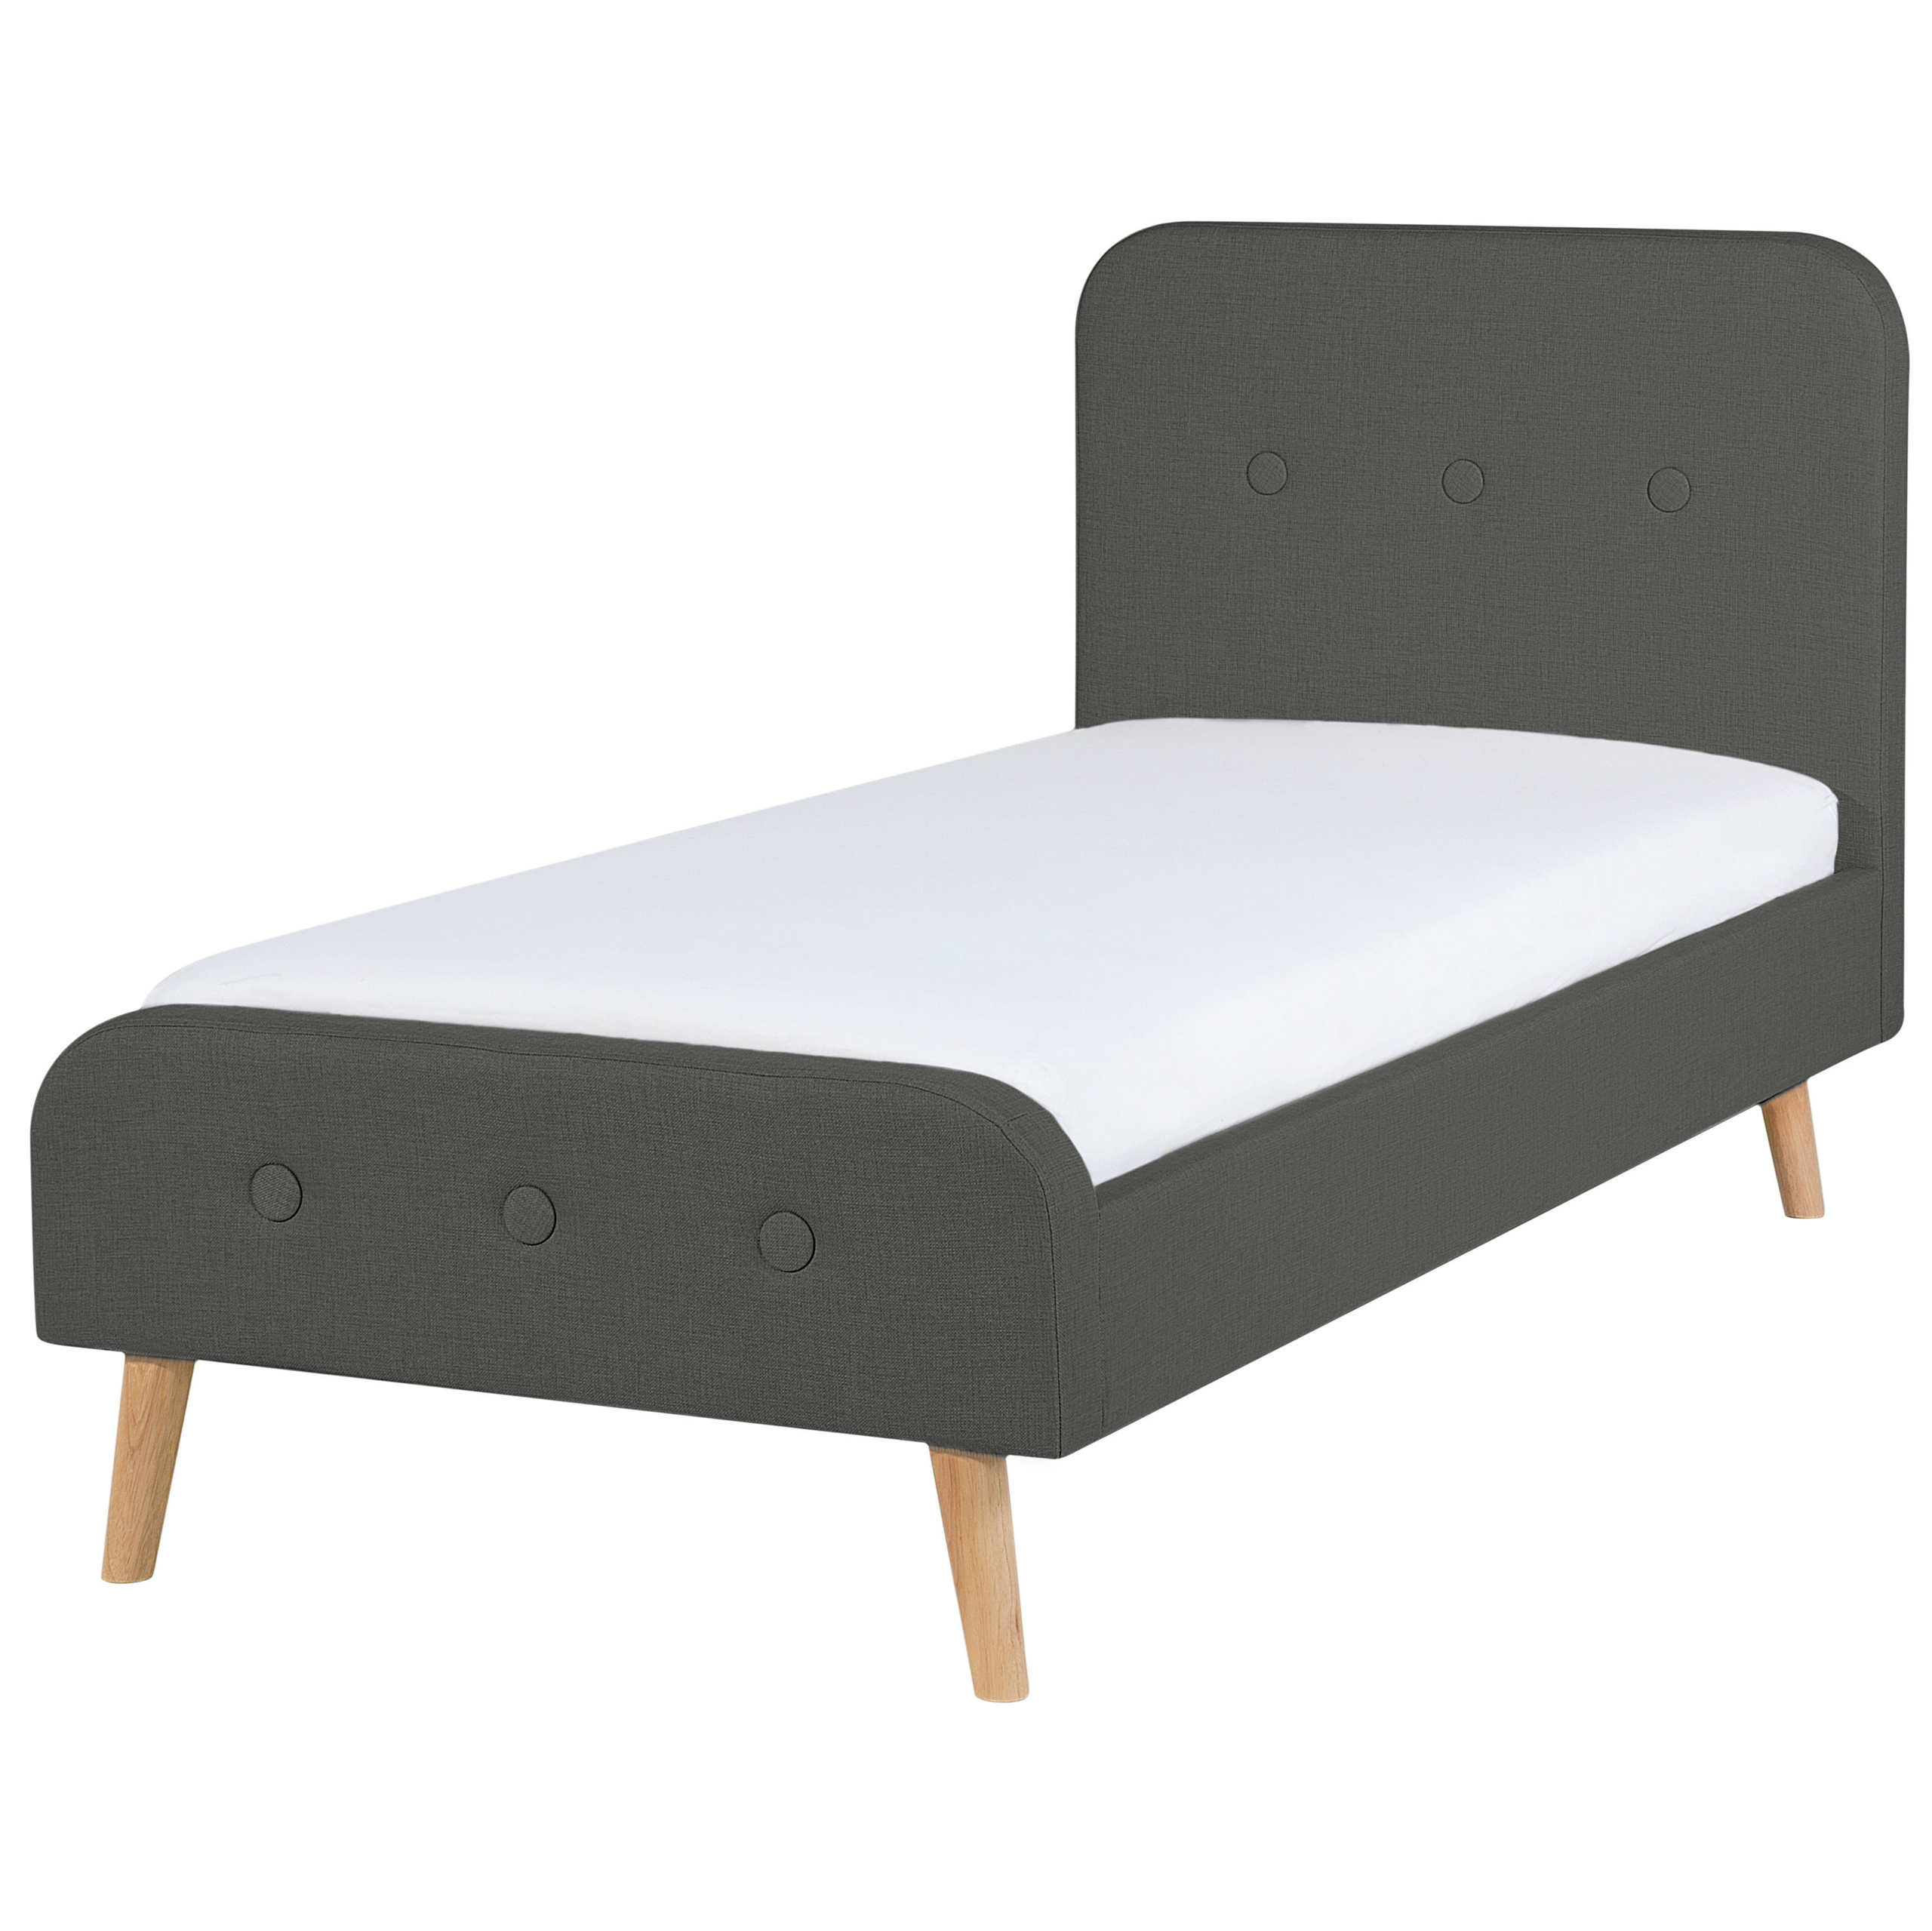 Beliani Slatted Bed Frame Dark Grey Polyester Fabric Upholstered Wooden Legs 3ft EU Single Size Modern Design